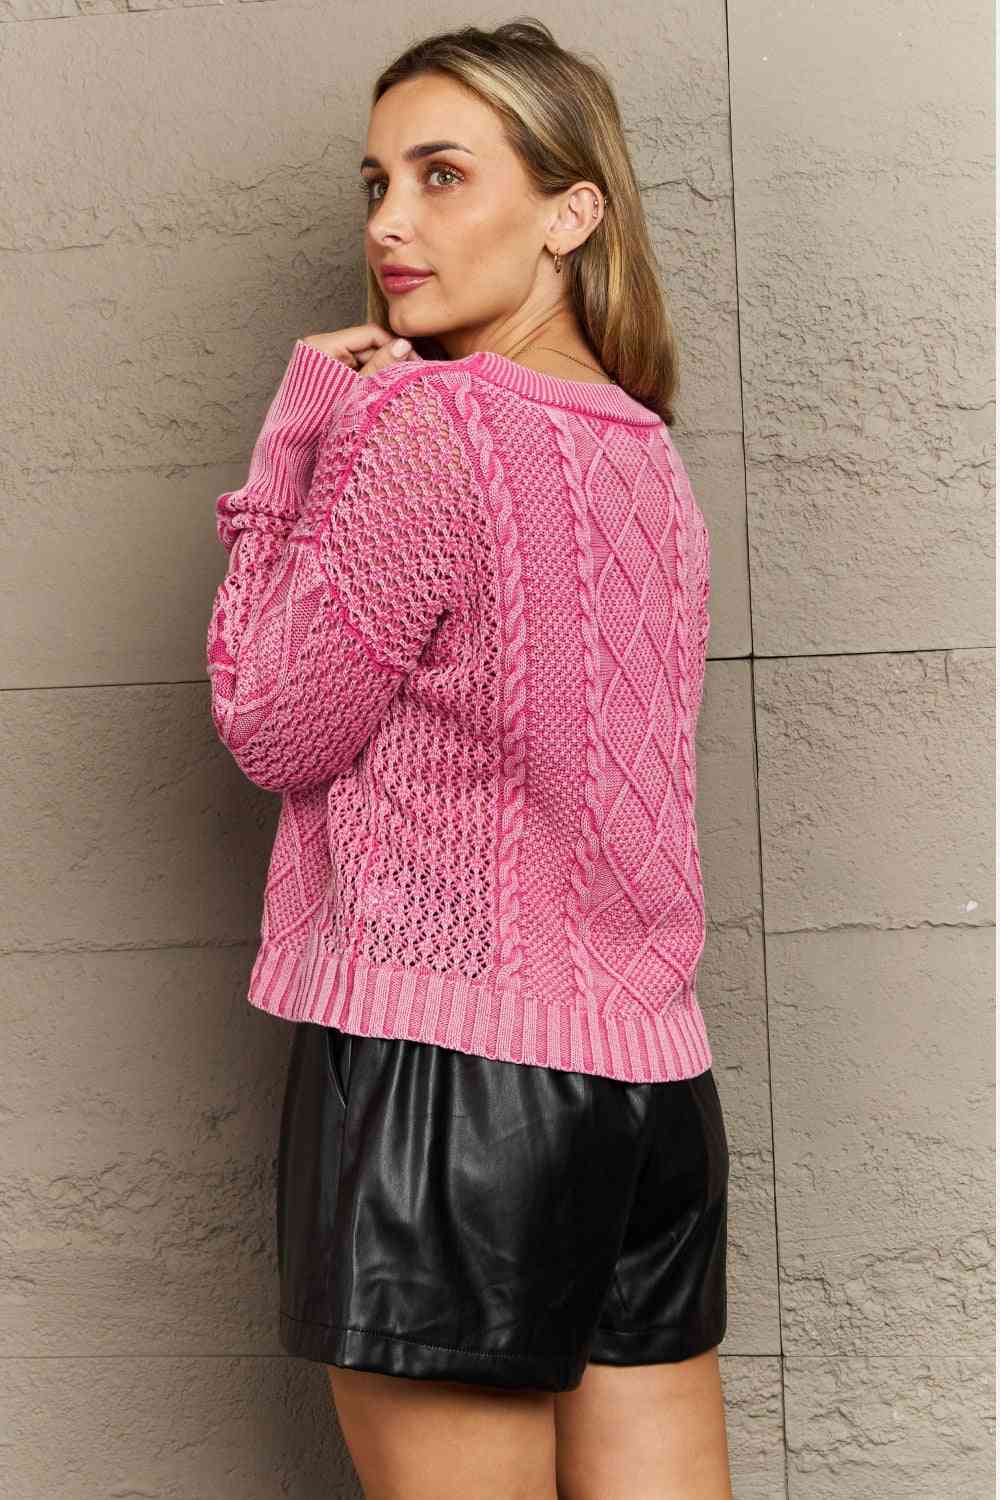 HEYSON Soft Focus Full Size Wash Cable Knit Cardigan in Fuchsia - TRENDMELO